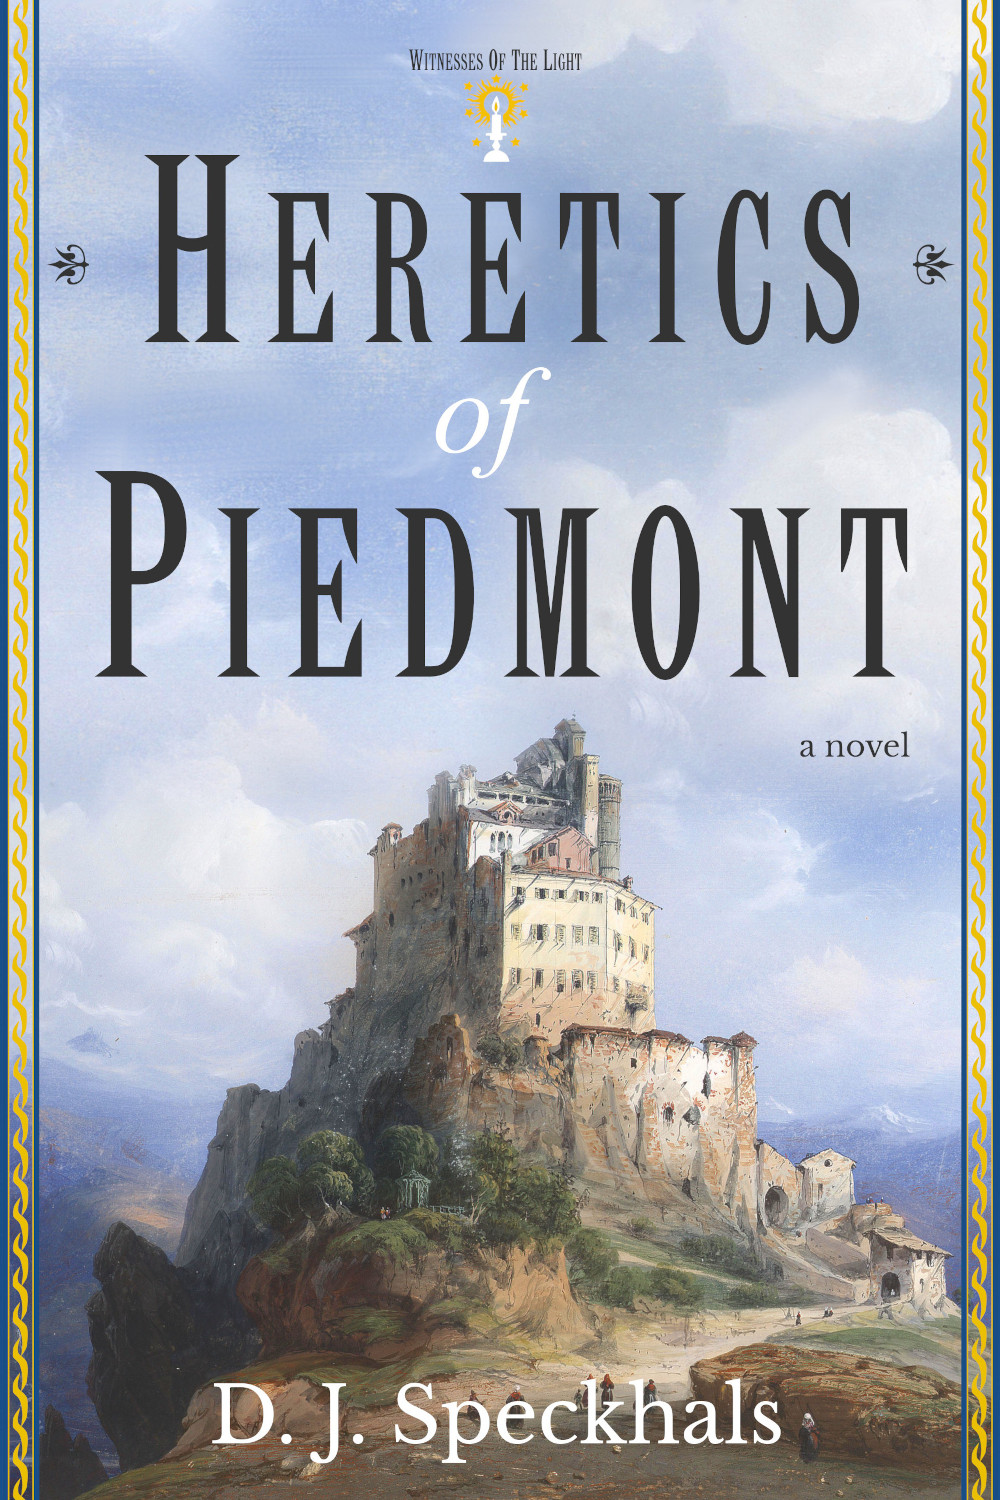 image from Heretics of Piedmont